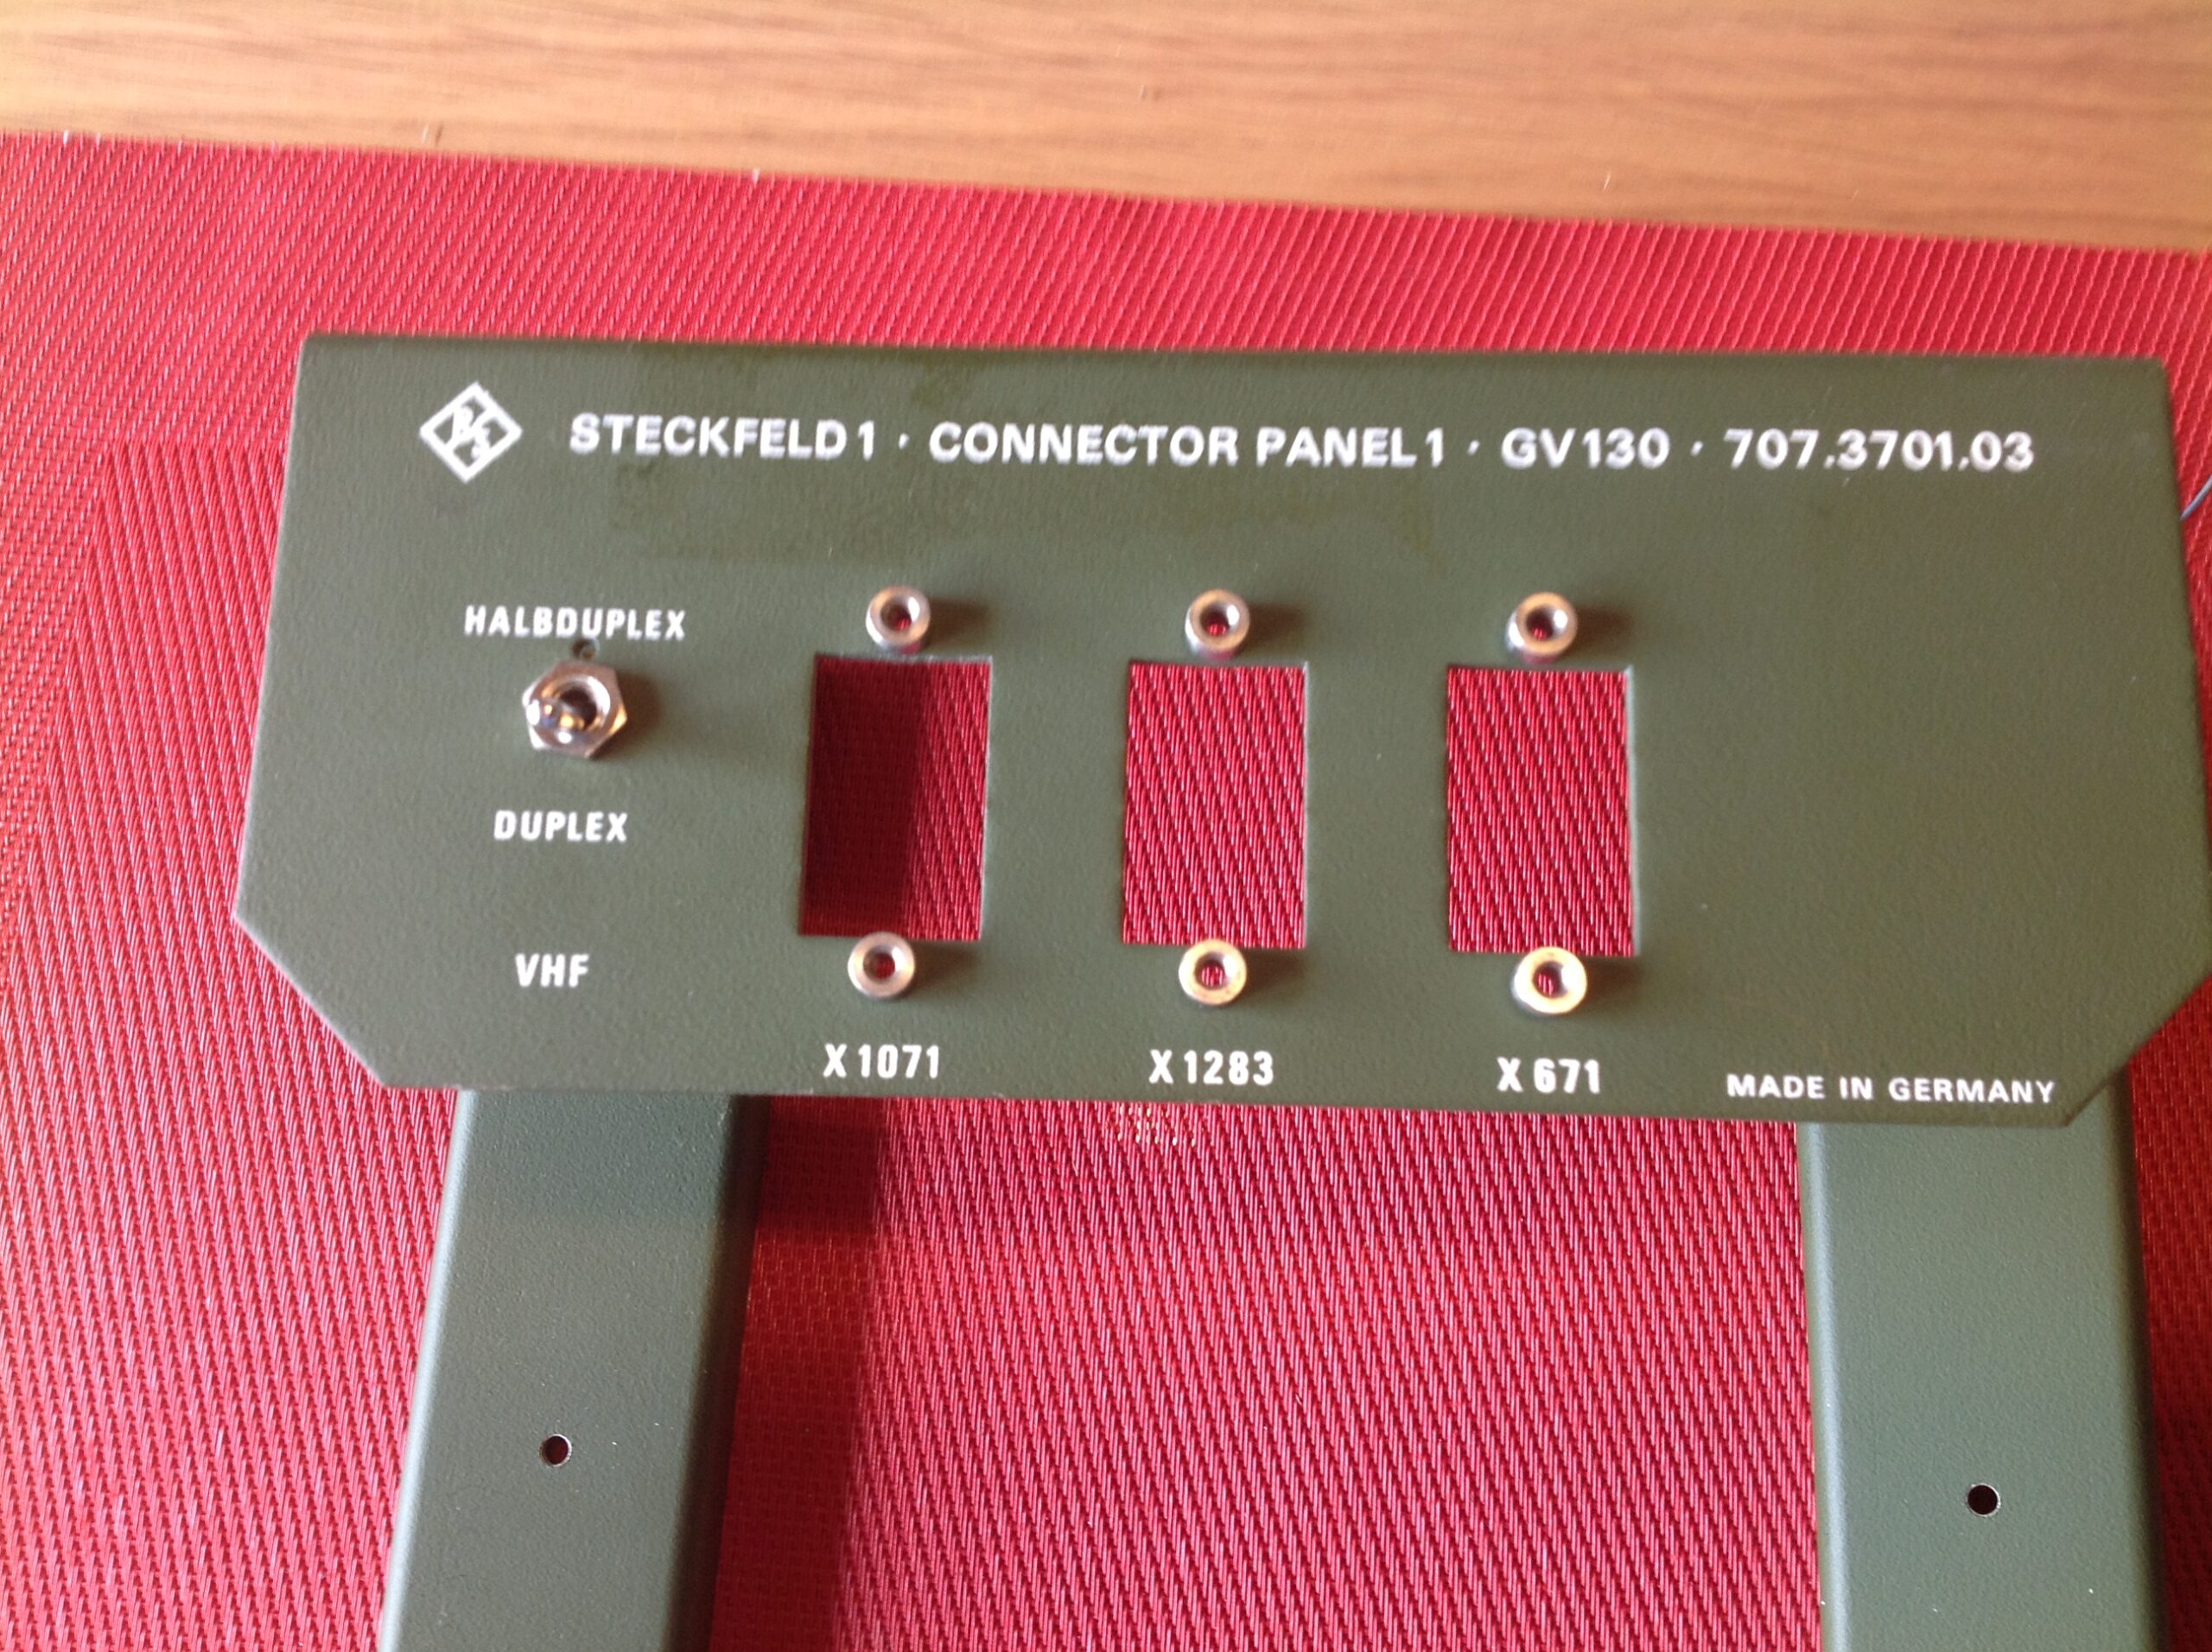 Rohde &amp; Schwarz Steckfeld 1 - Connector Panel 1 - GV 130